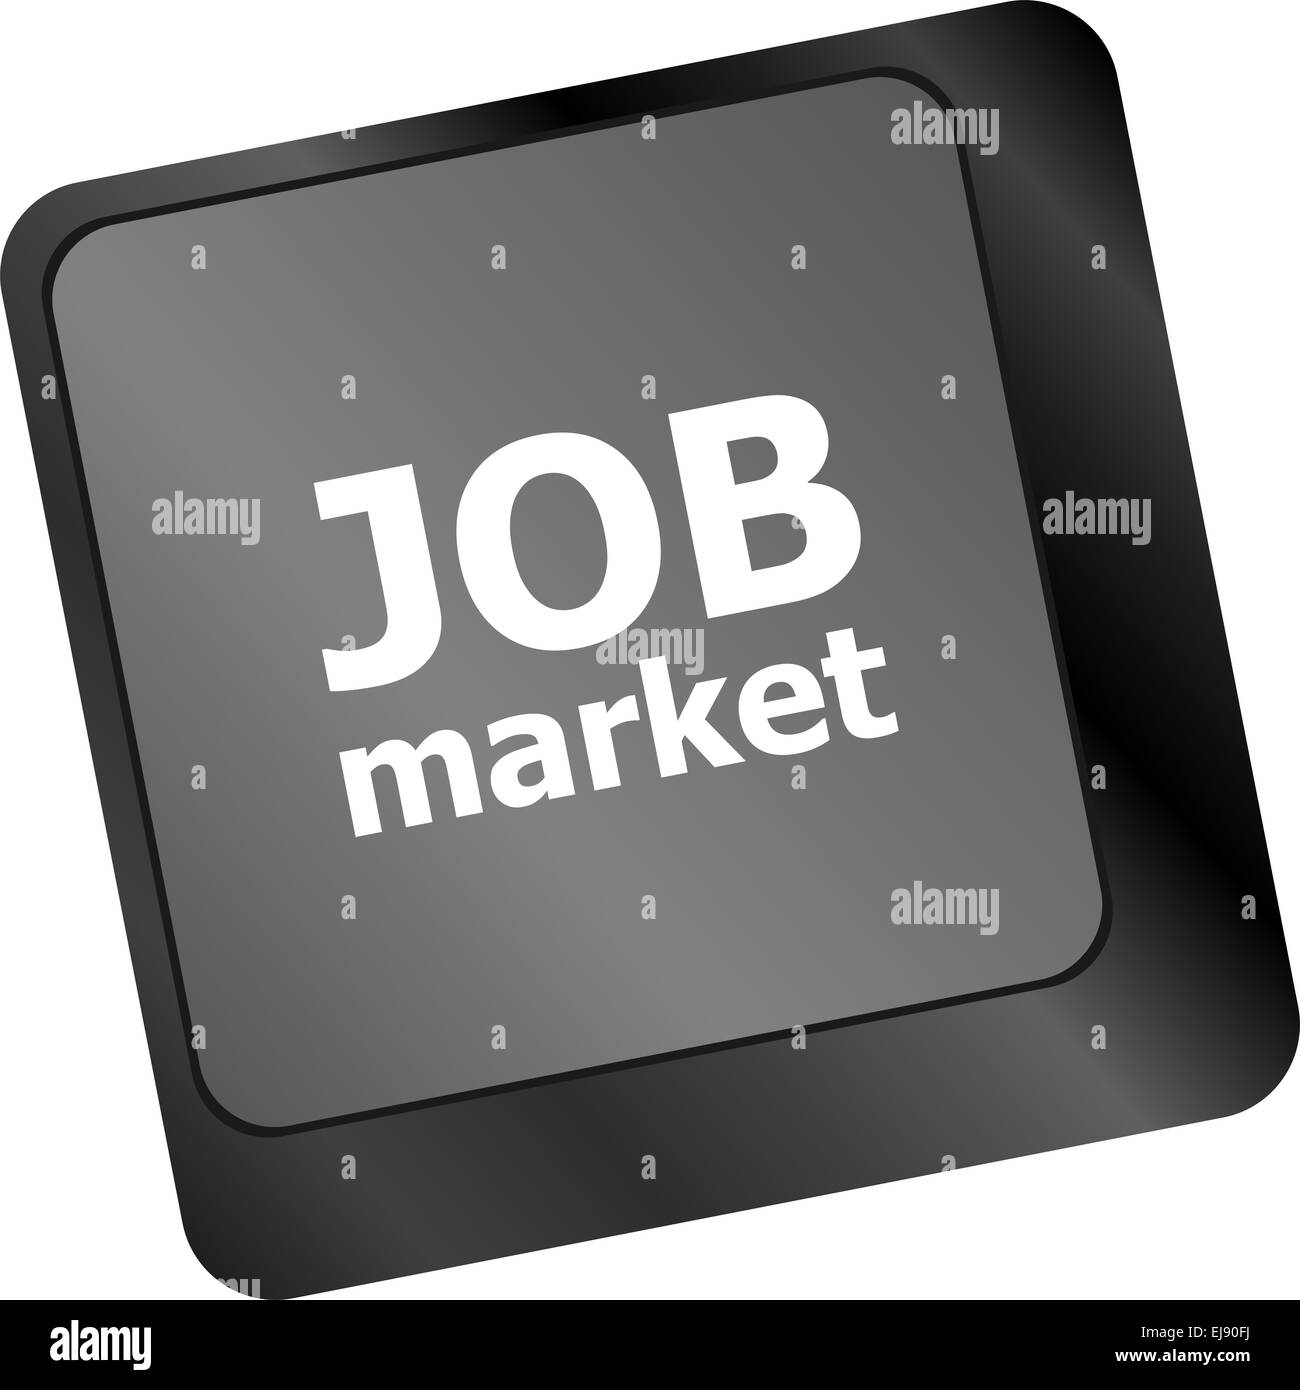 Job market key on the computer keyboard Stock Photo